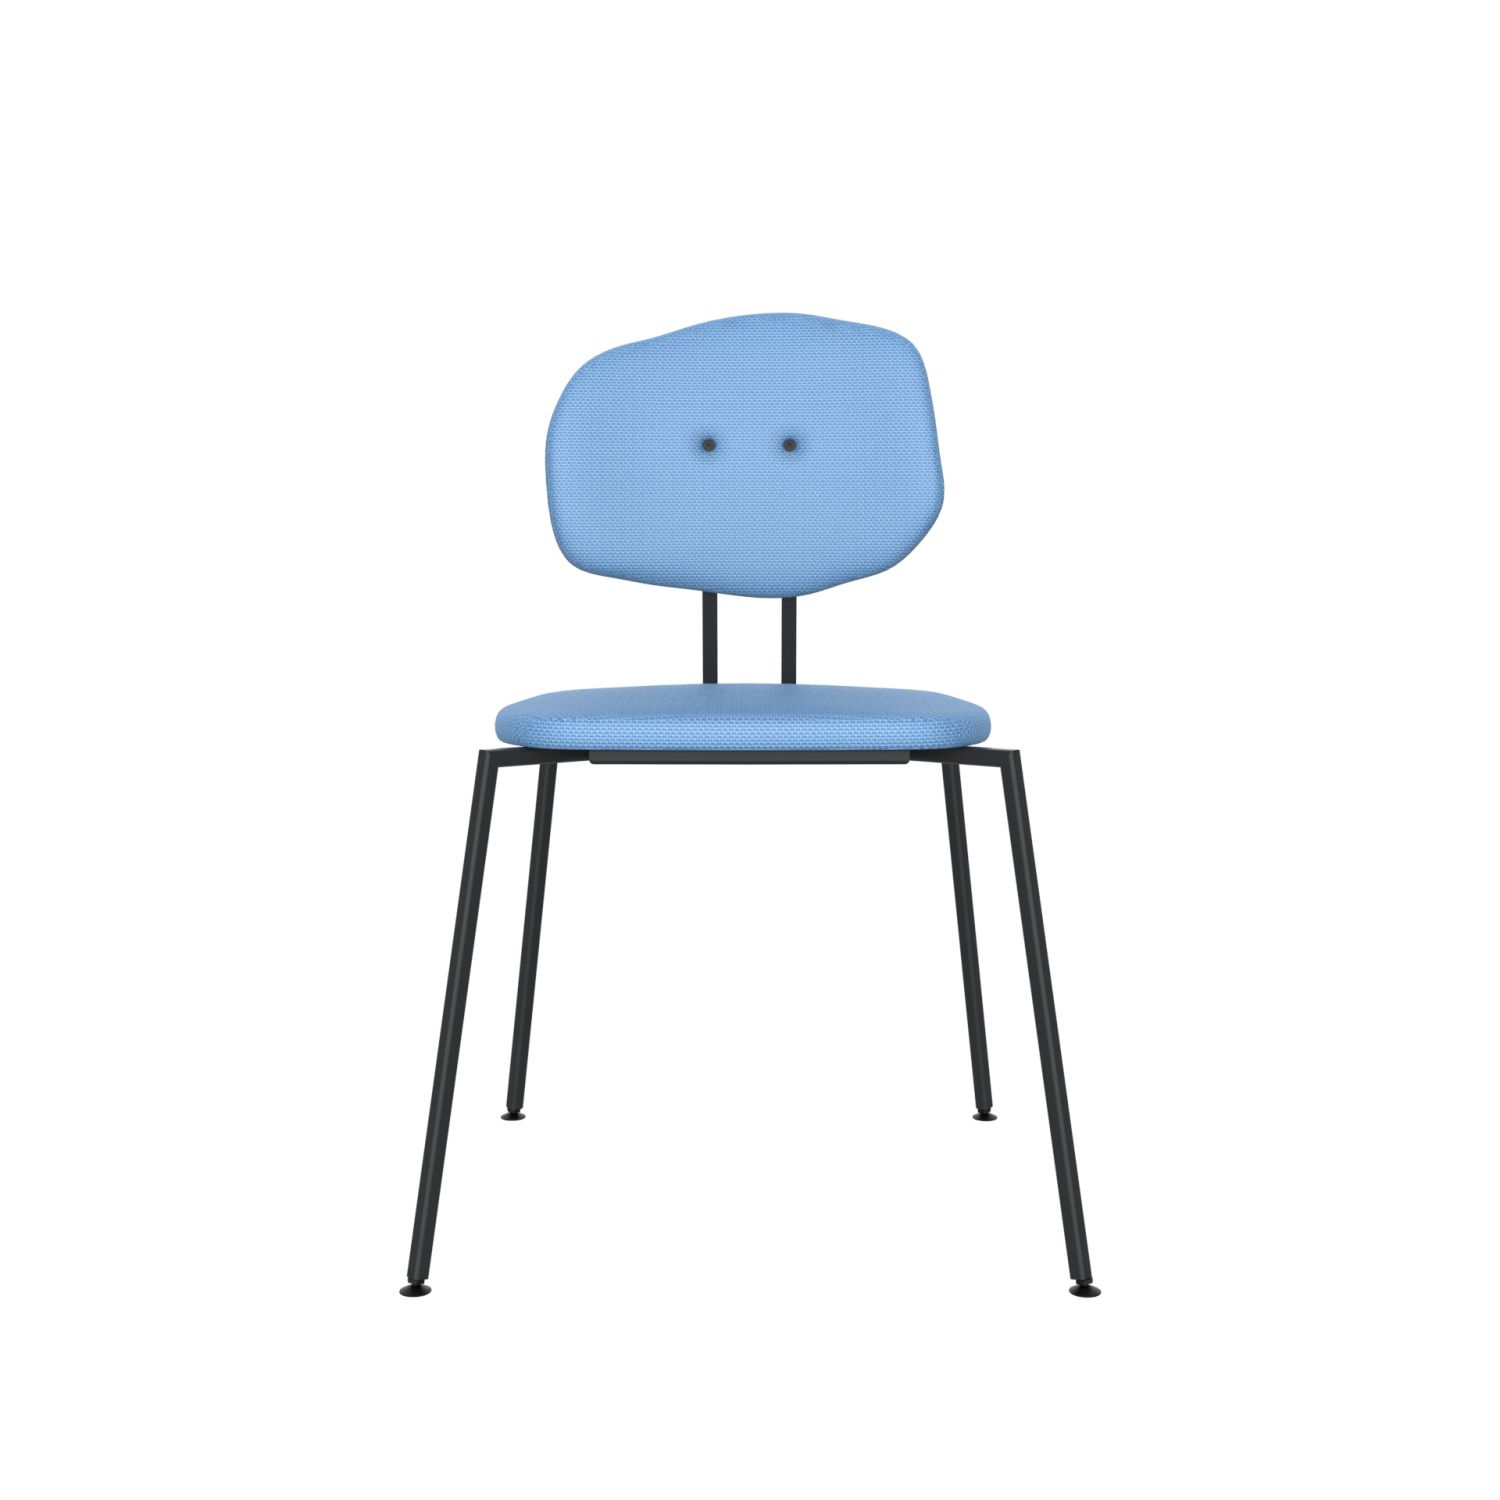 lensvelt maarten baas chair 141 stackable without armrests backrest e blue horizon 040 black ral9005 hard leg ends